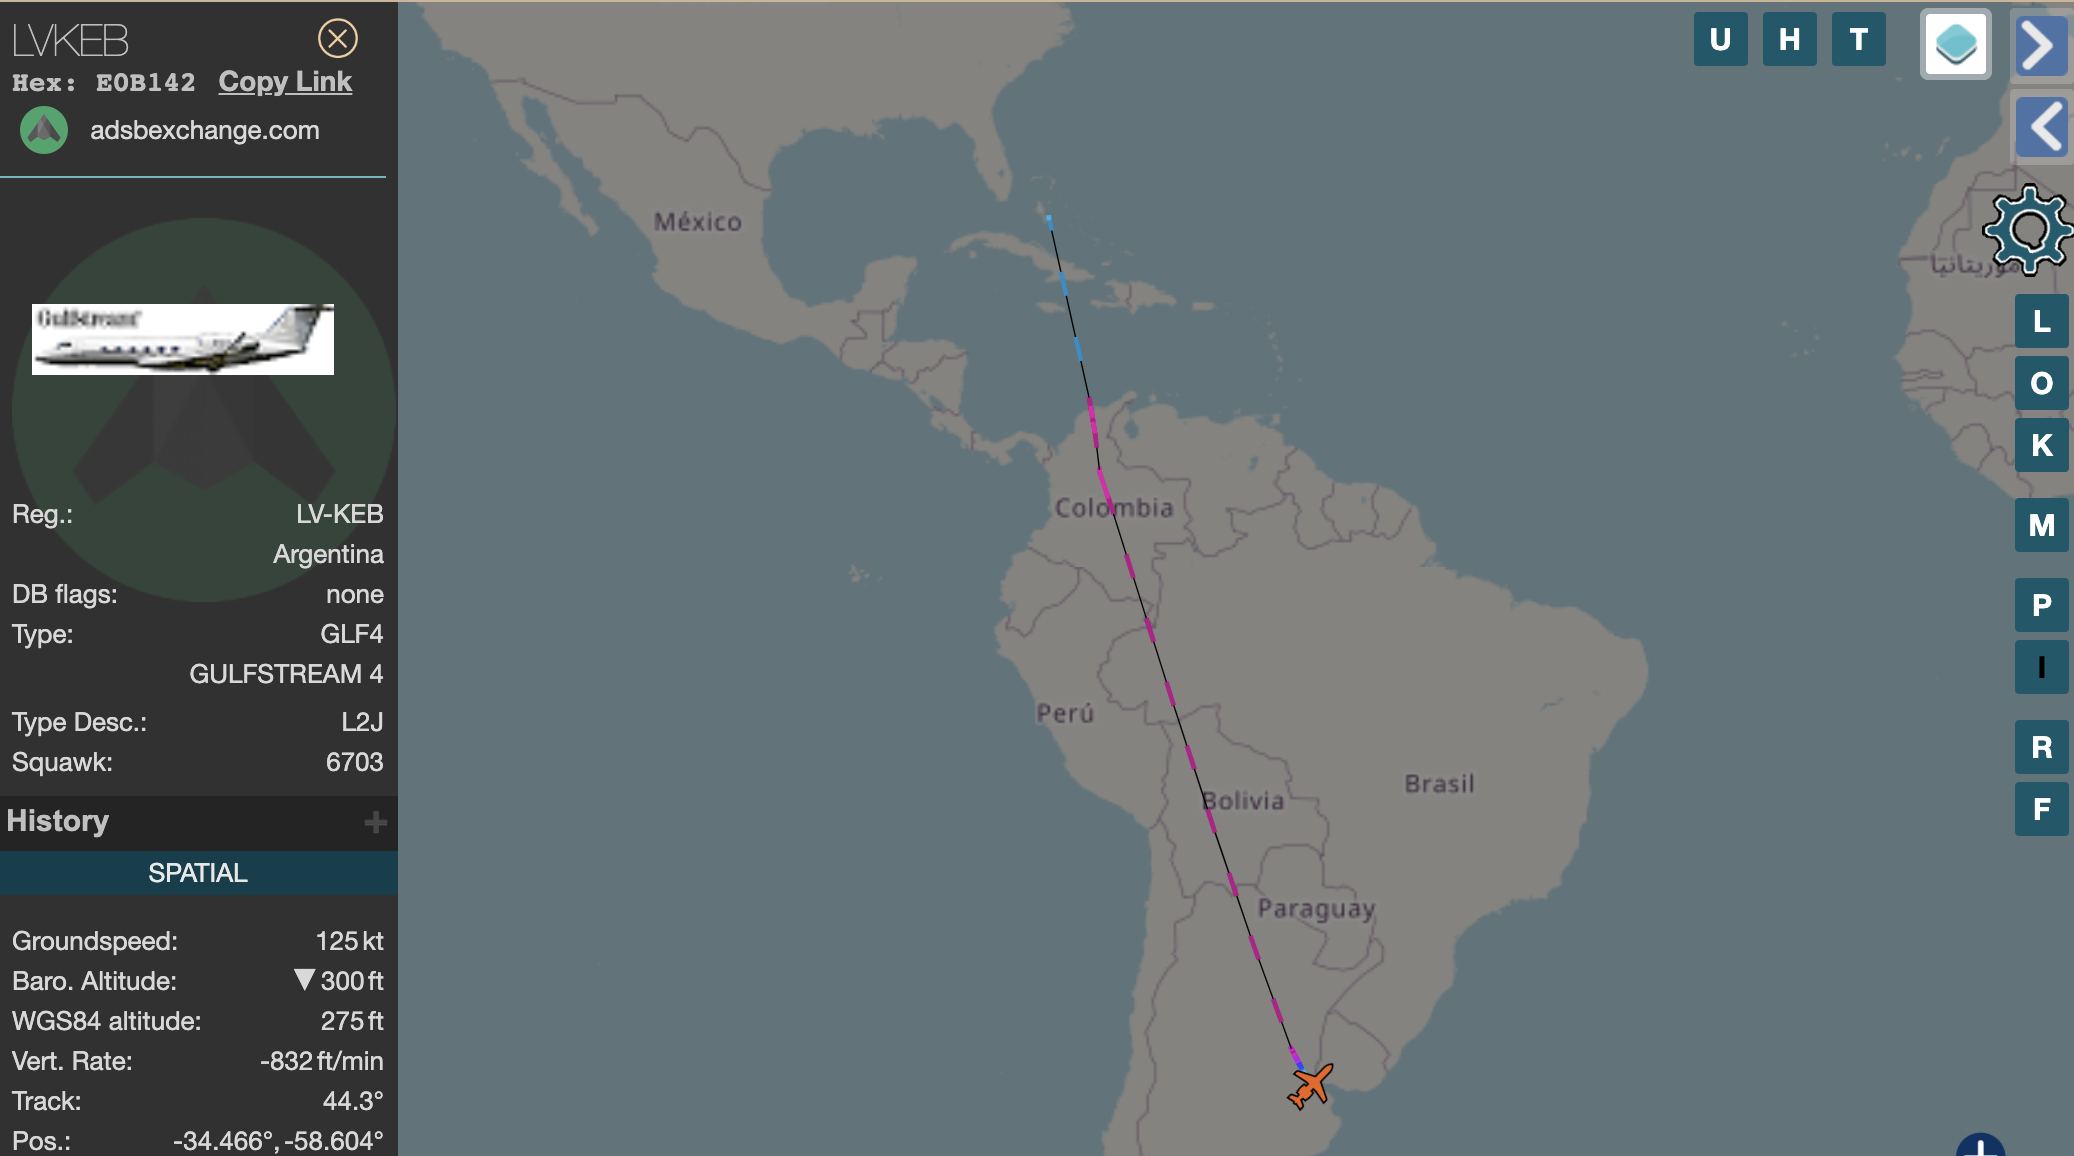 SBF in argentina - suspected flightpath